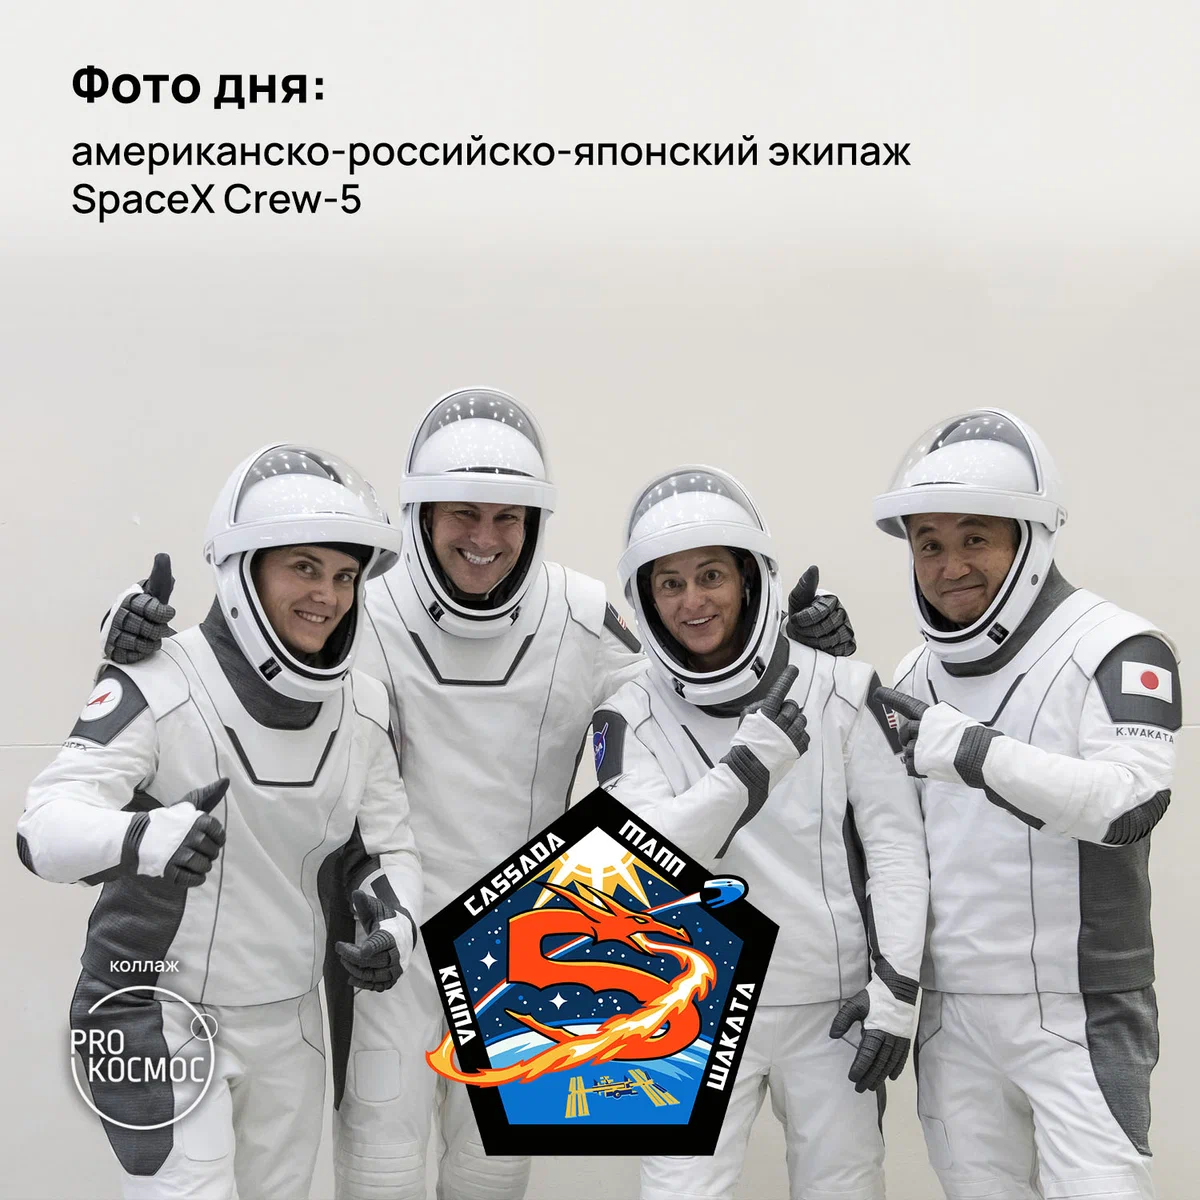 Фото дня: американско-российско-японский экипаж SpaceX Crew-5 height=1200px width=1200px